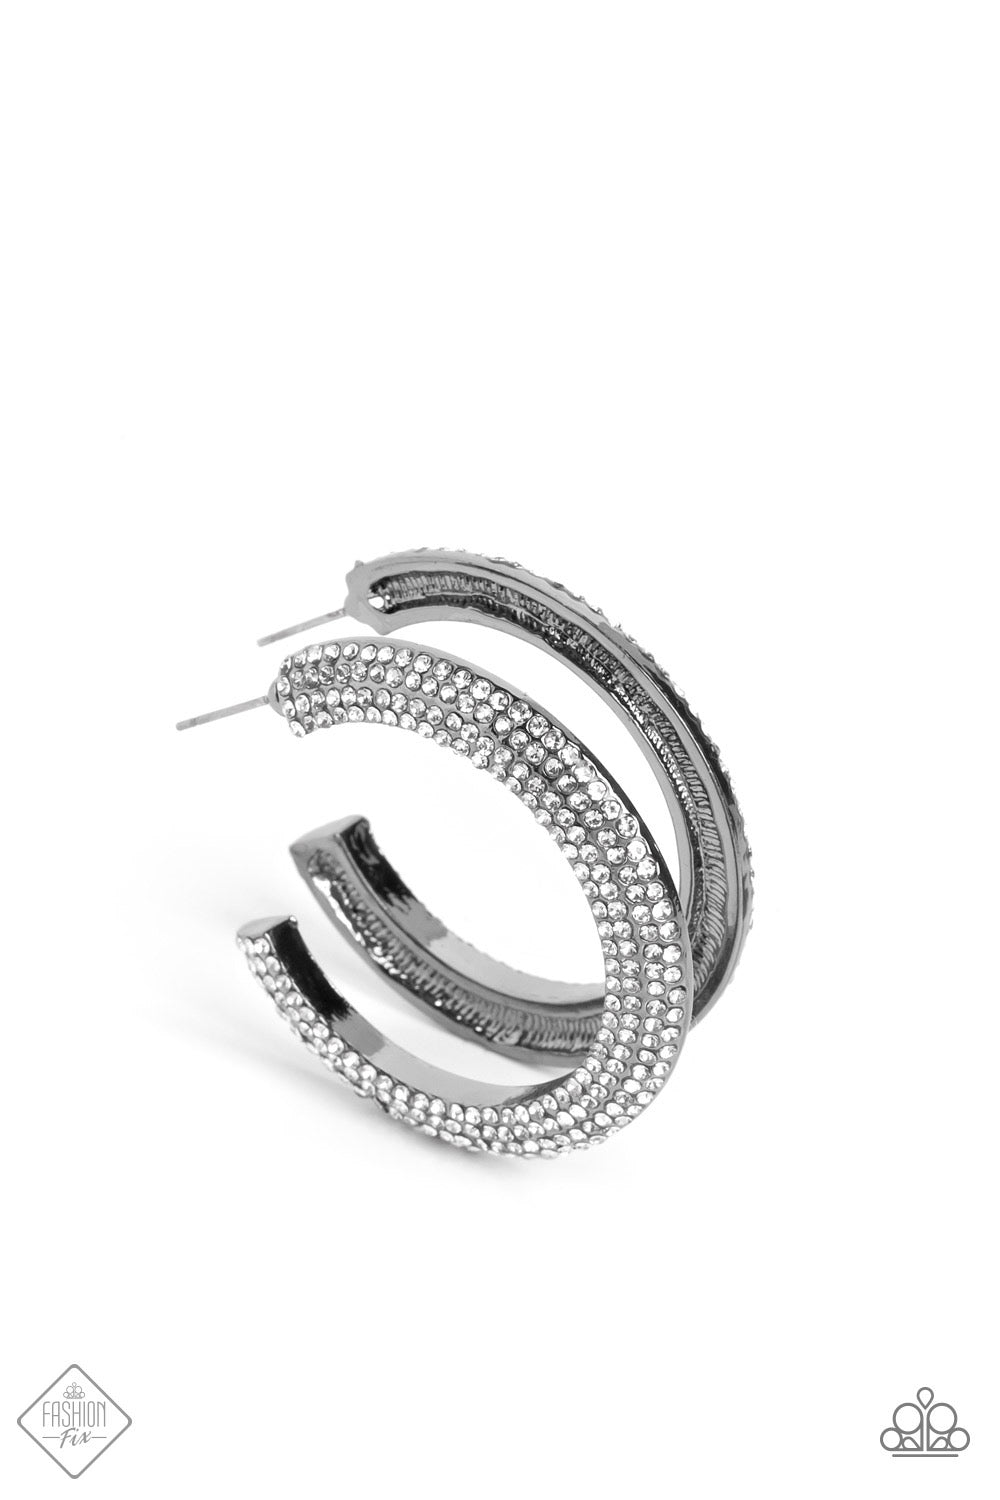 Paparazzi Dazzling Dynamo - Black Earrings- February 2023 Fashion Fix-Paparazzi Jewelry Images 